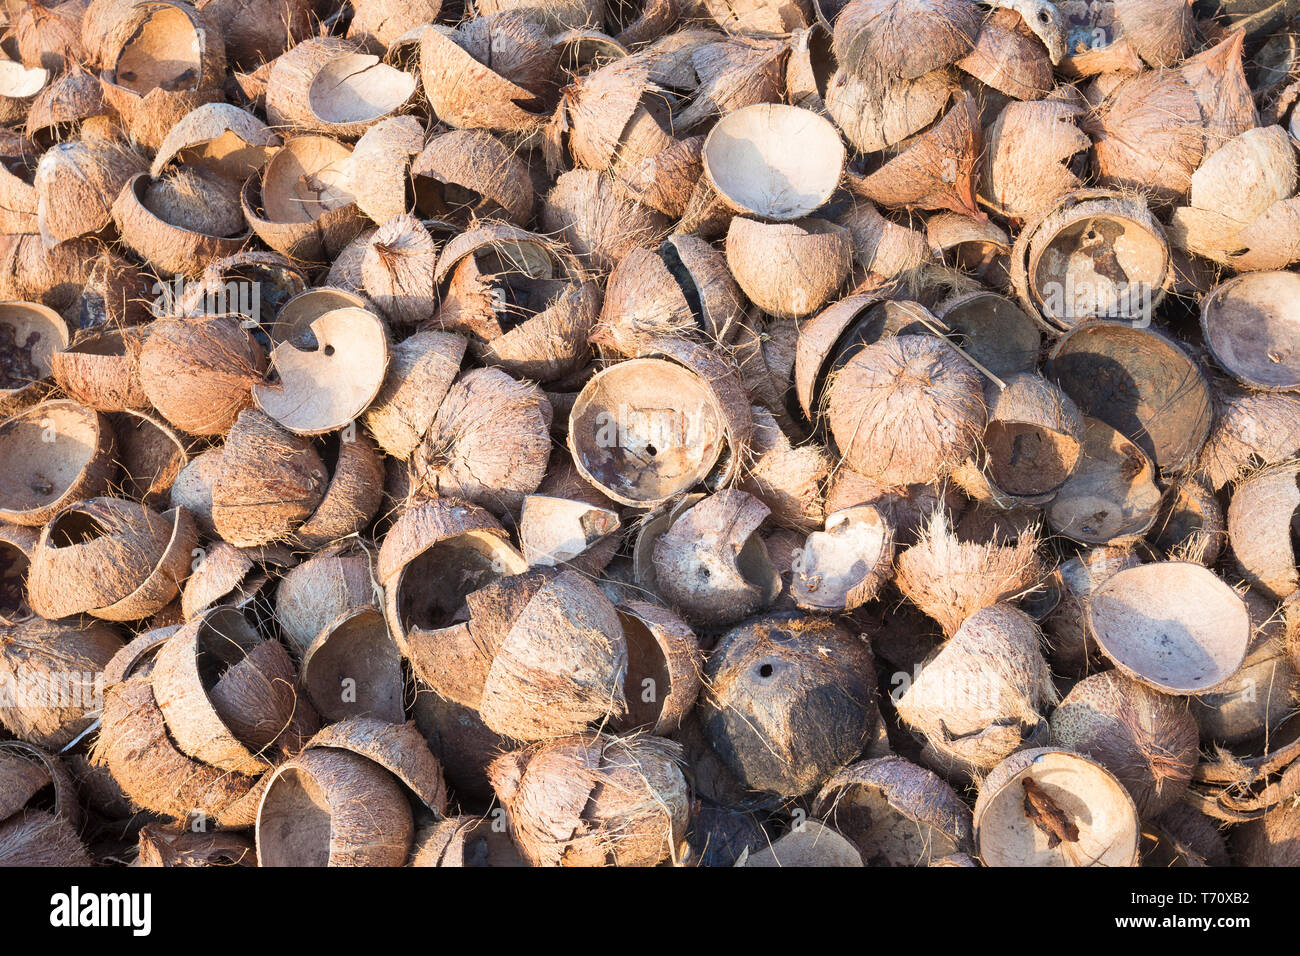 Coconut shells, Thailand Stock Photo